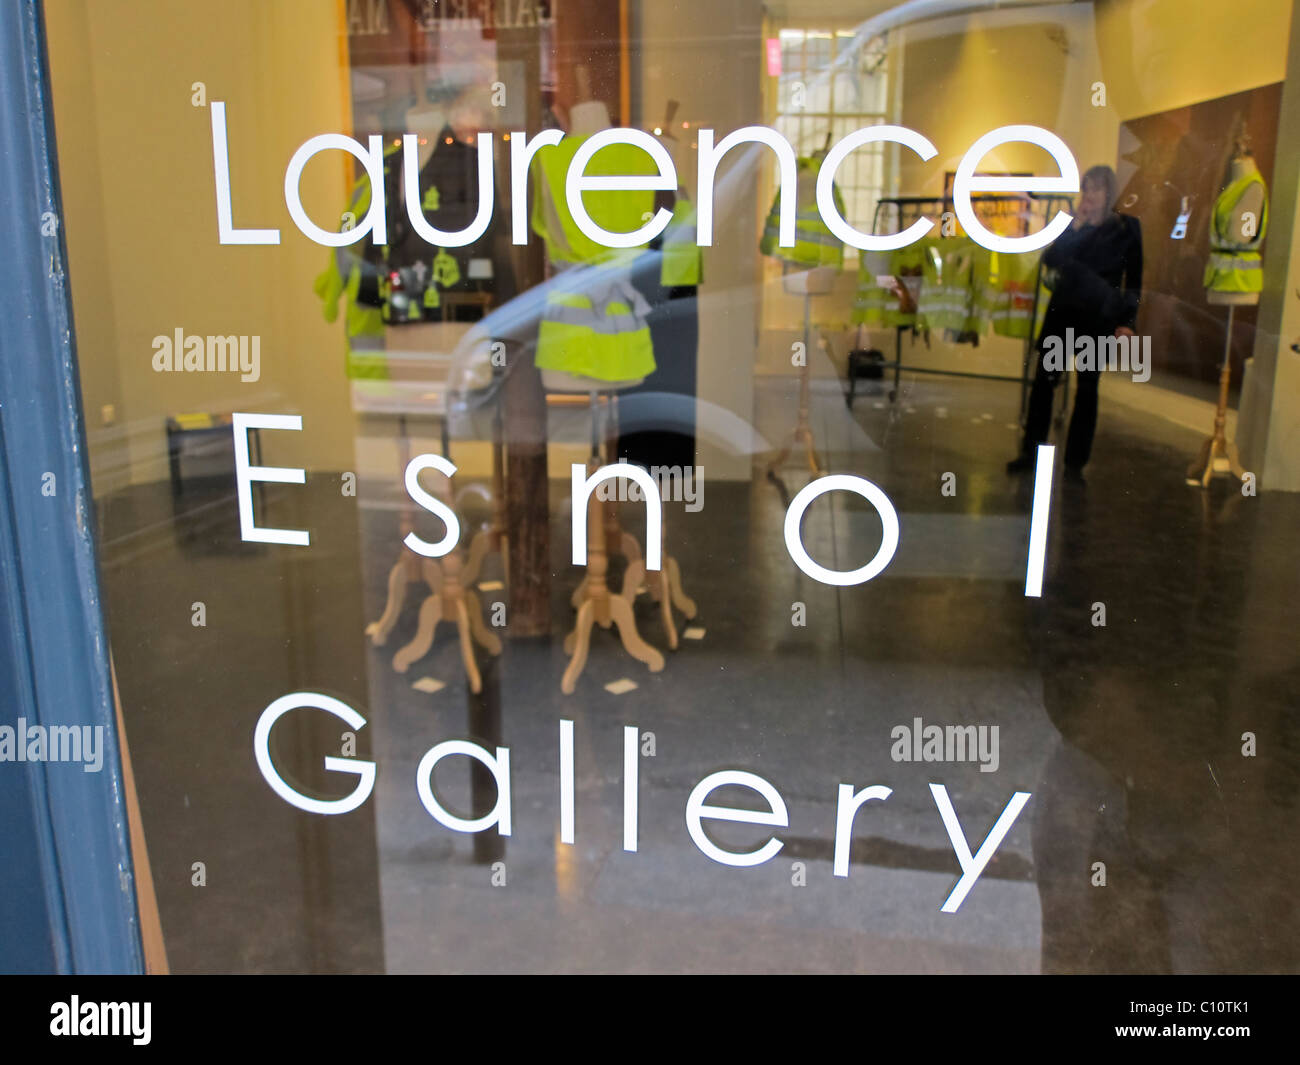 Paris, France, French Art Gallery in 'St Germain des Prés' District, 'Laurence Esnol' Gallery, Shop Front WIndow Sign Stock Photo